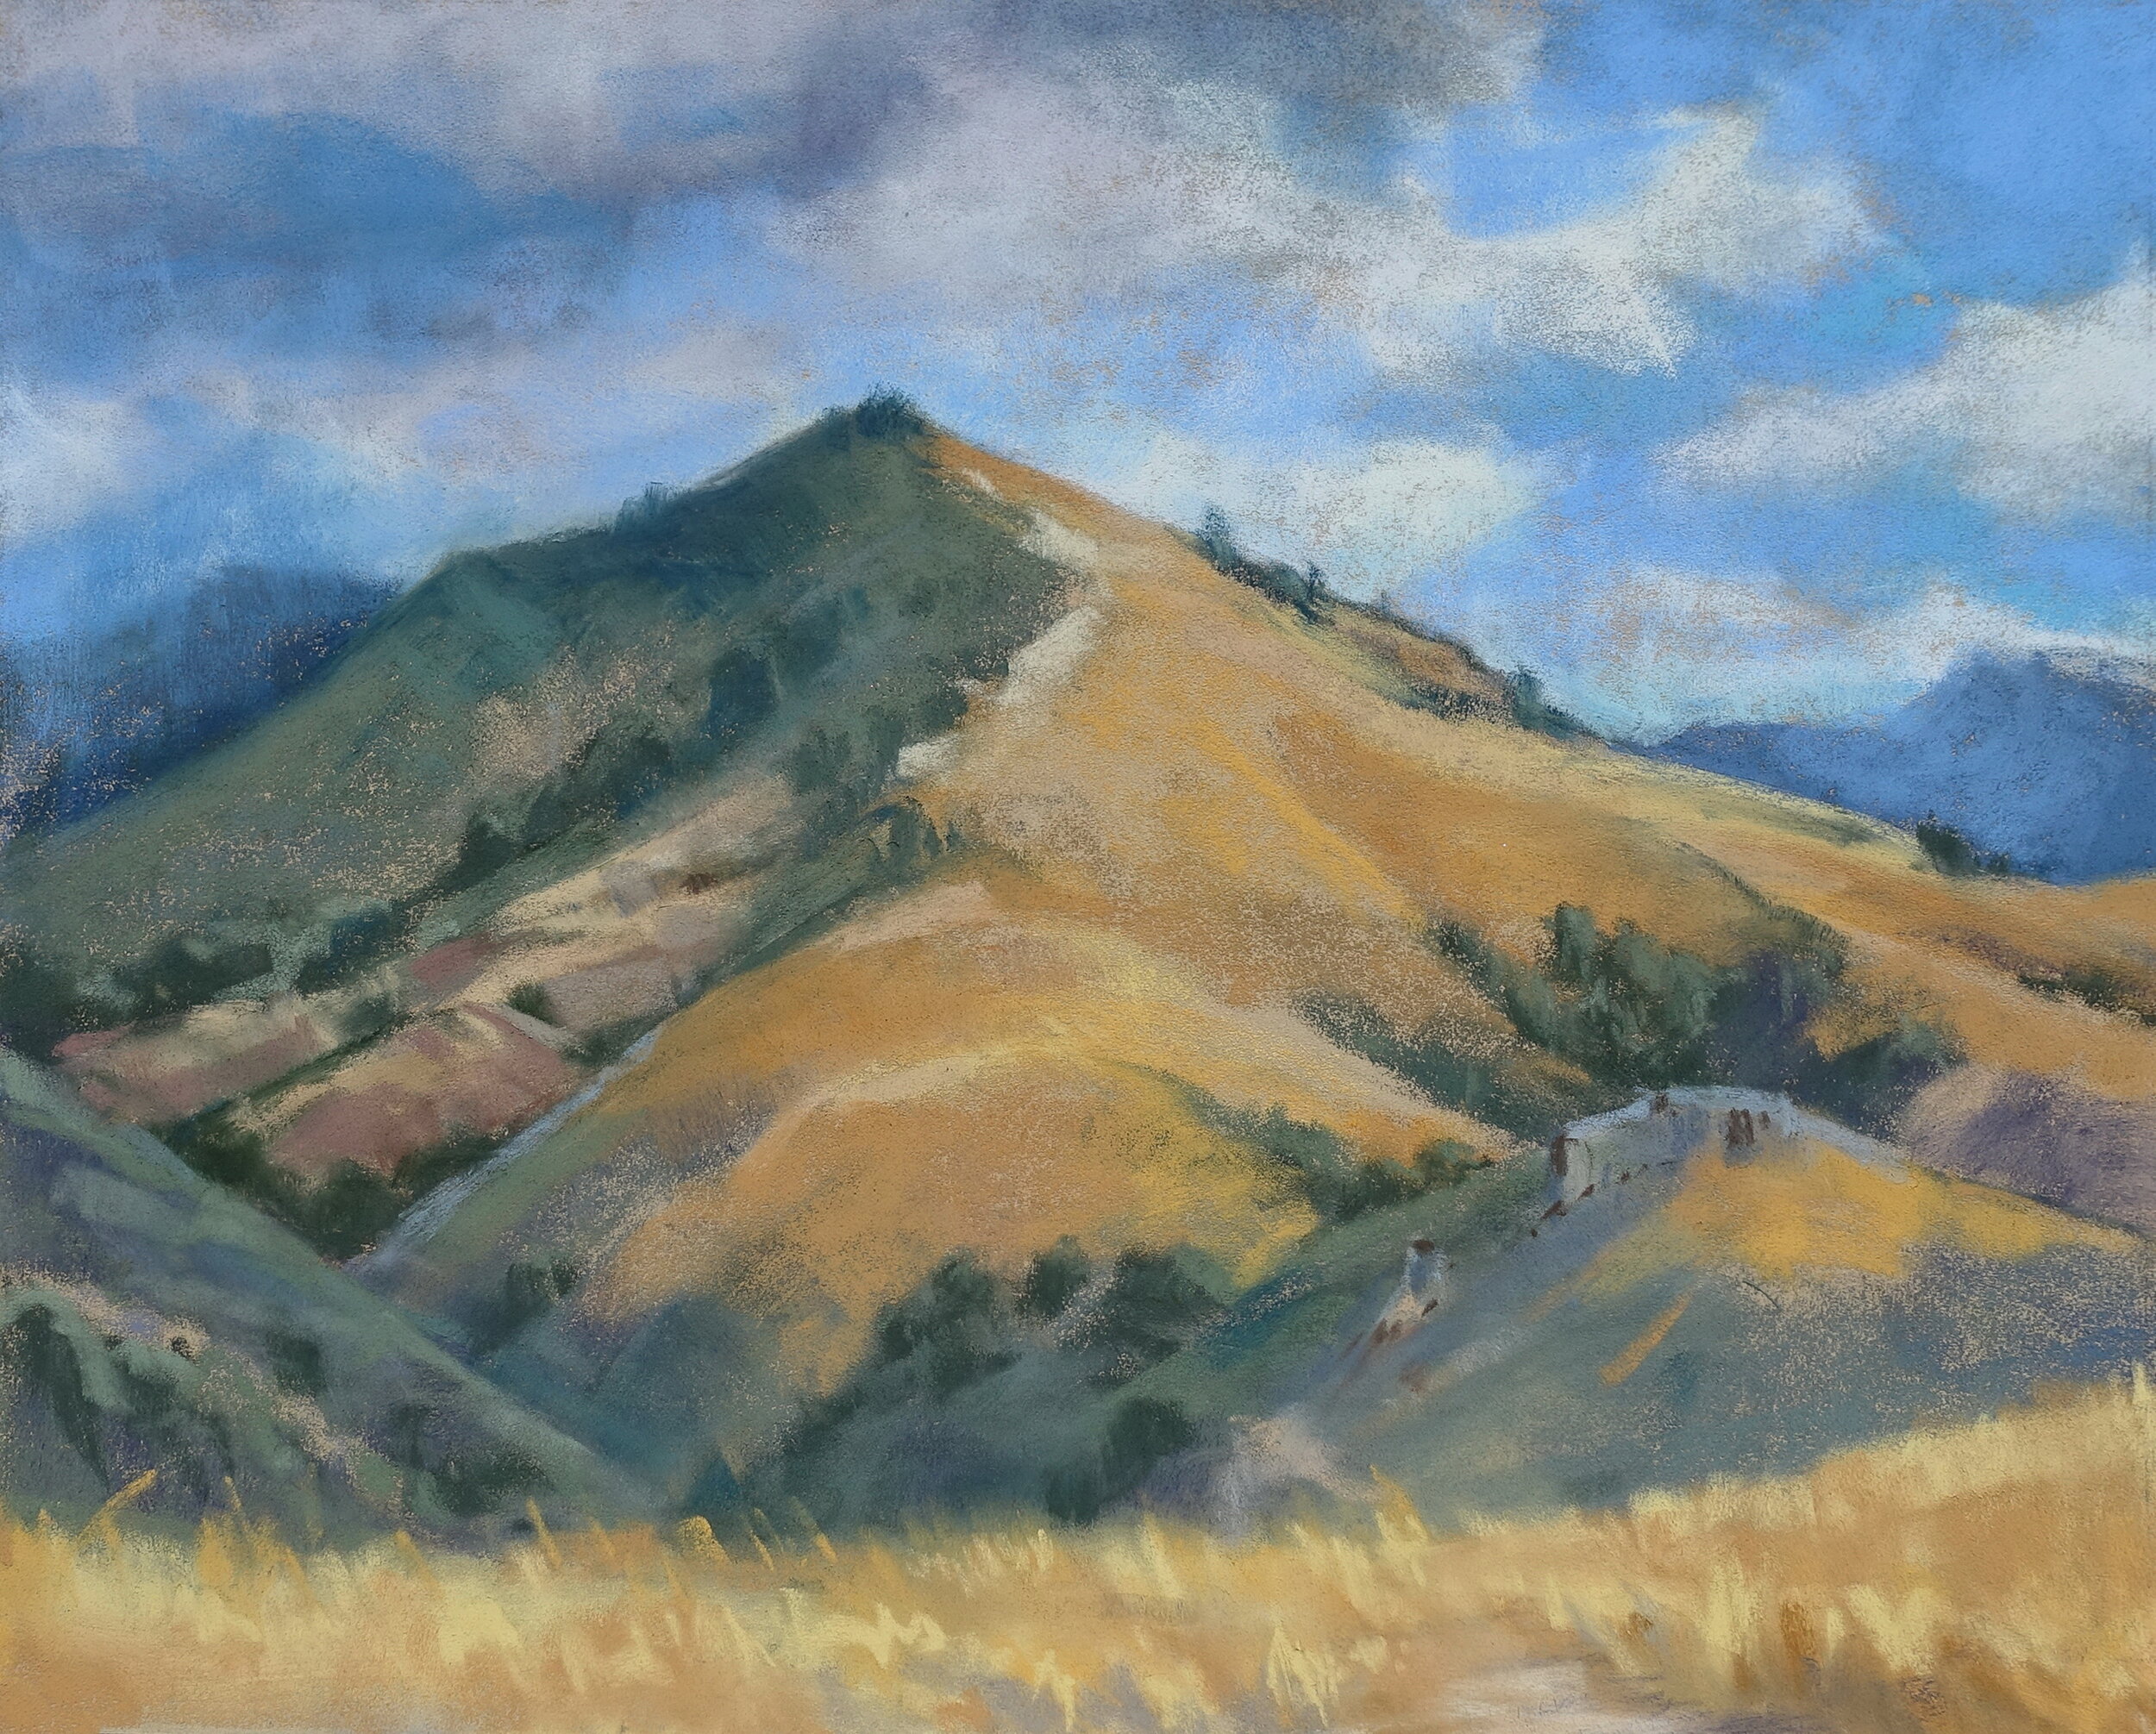 Chris Chapman, "Clouds Over Grass Mountain," Pastel